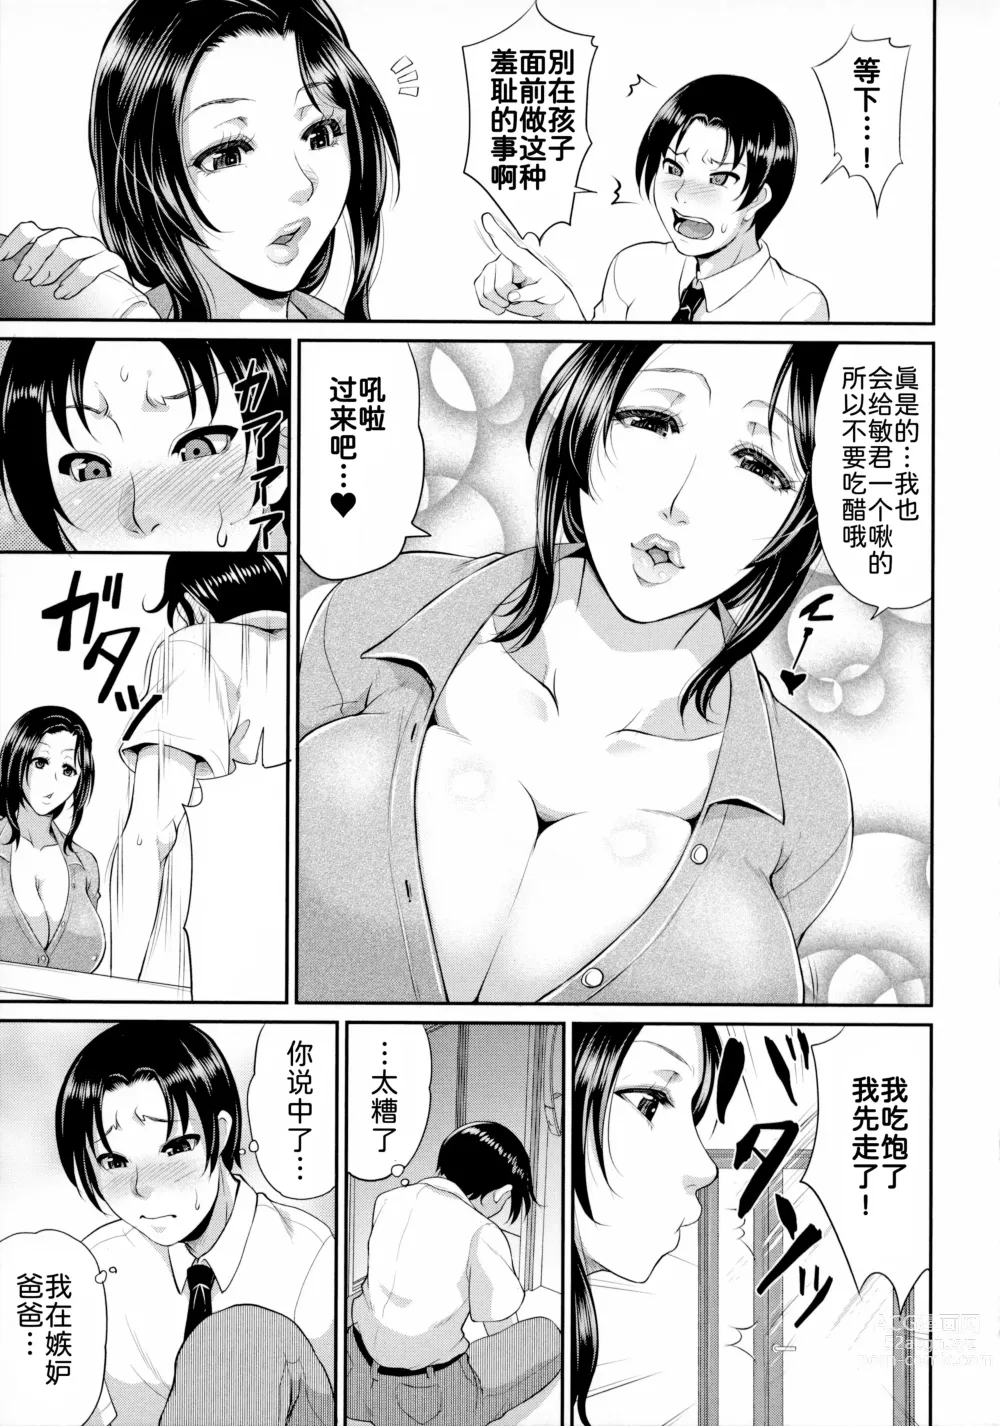 Page 6 of manga Uruwashi no Wife